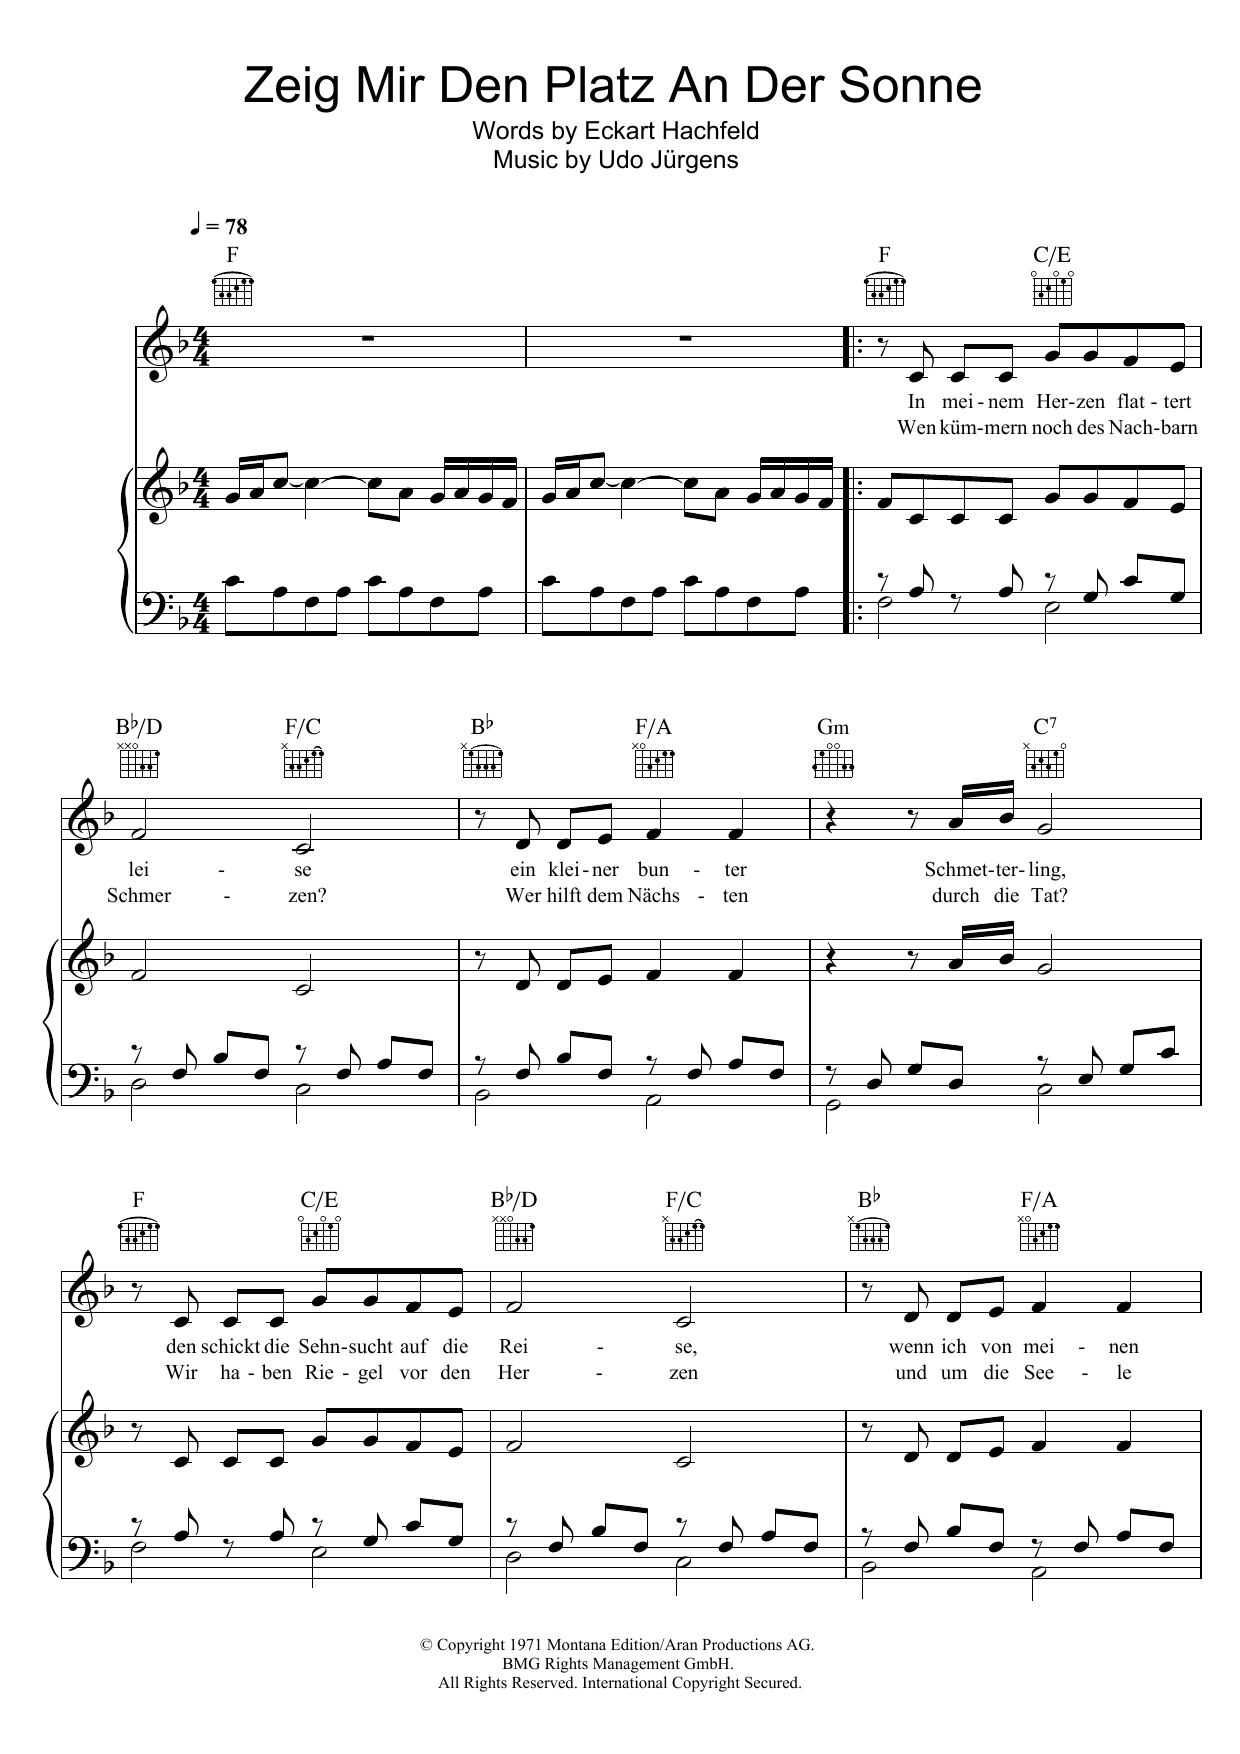 Udo Jurgens Zeig Mir Den Platz An Der Sonne Sheet Music Notes & Chords for Piano, Vocal & Guitar (Right-Hand Melody) - Download or Print PDF